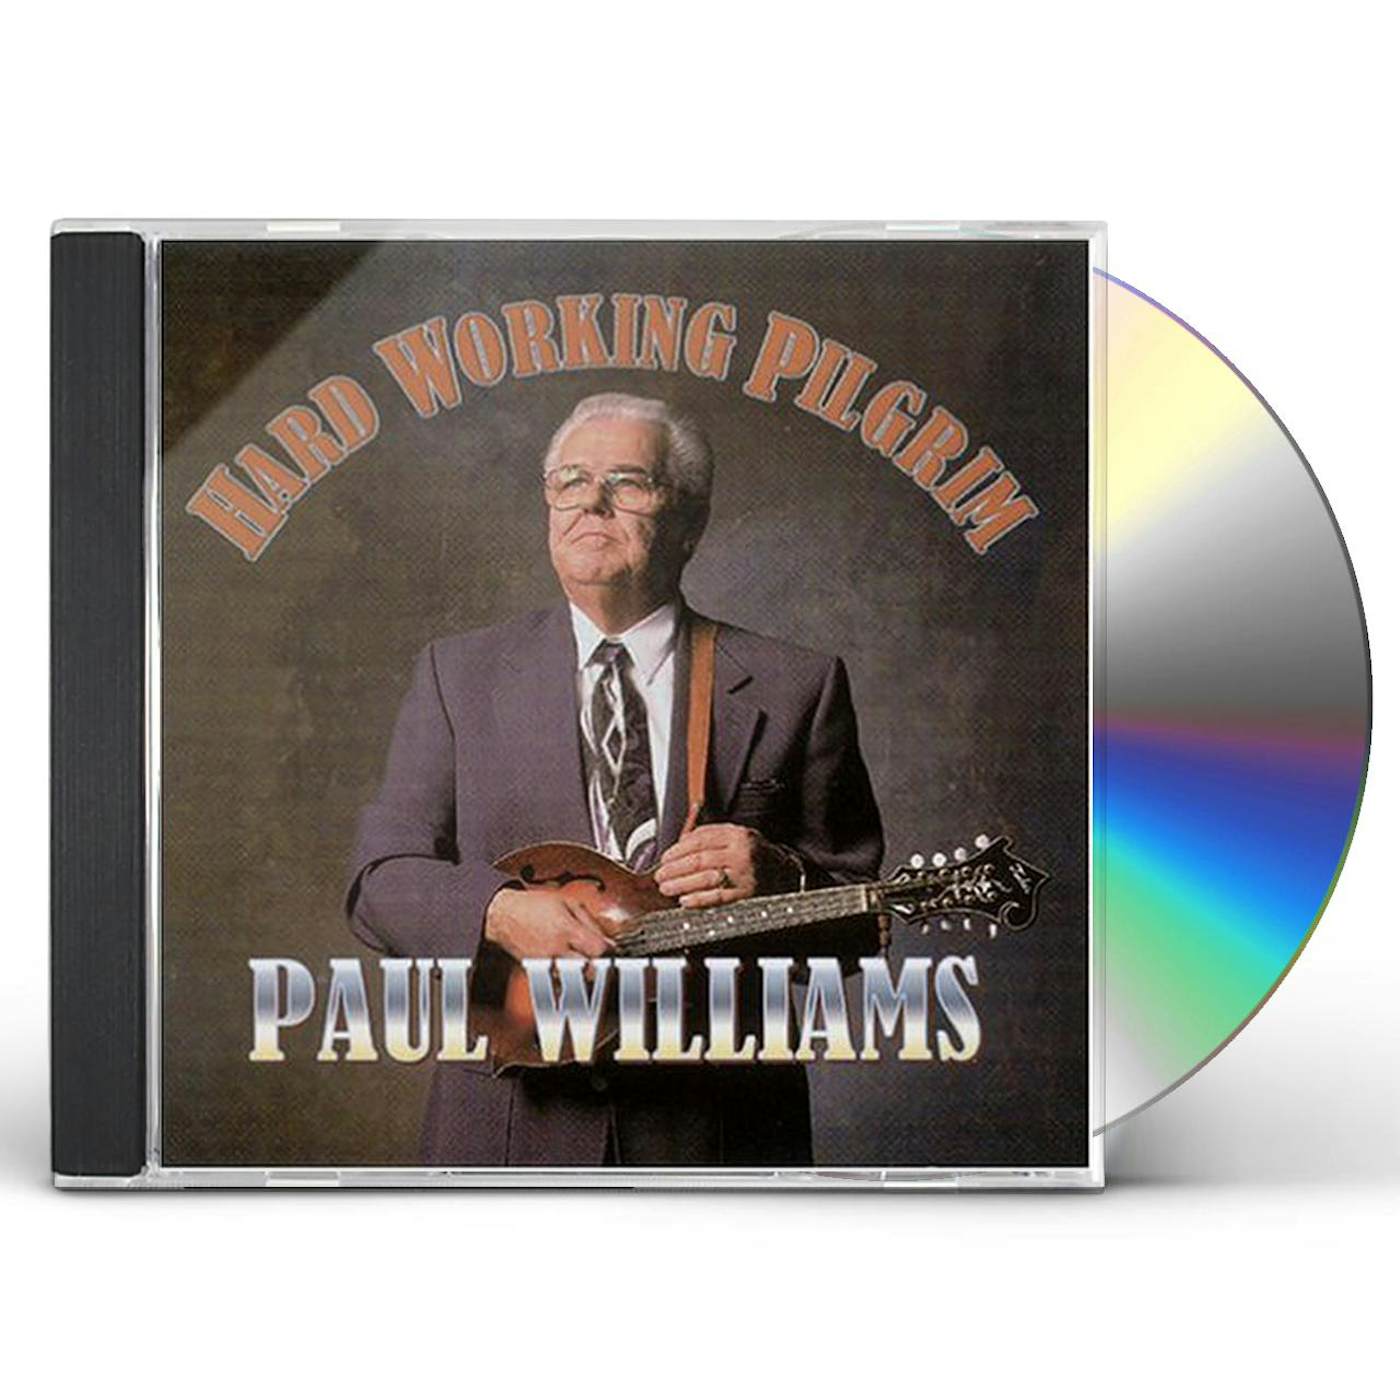 Paul Williams HARD WORKING PILGRIM CD